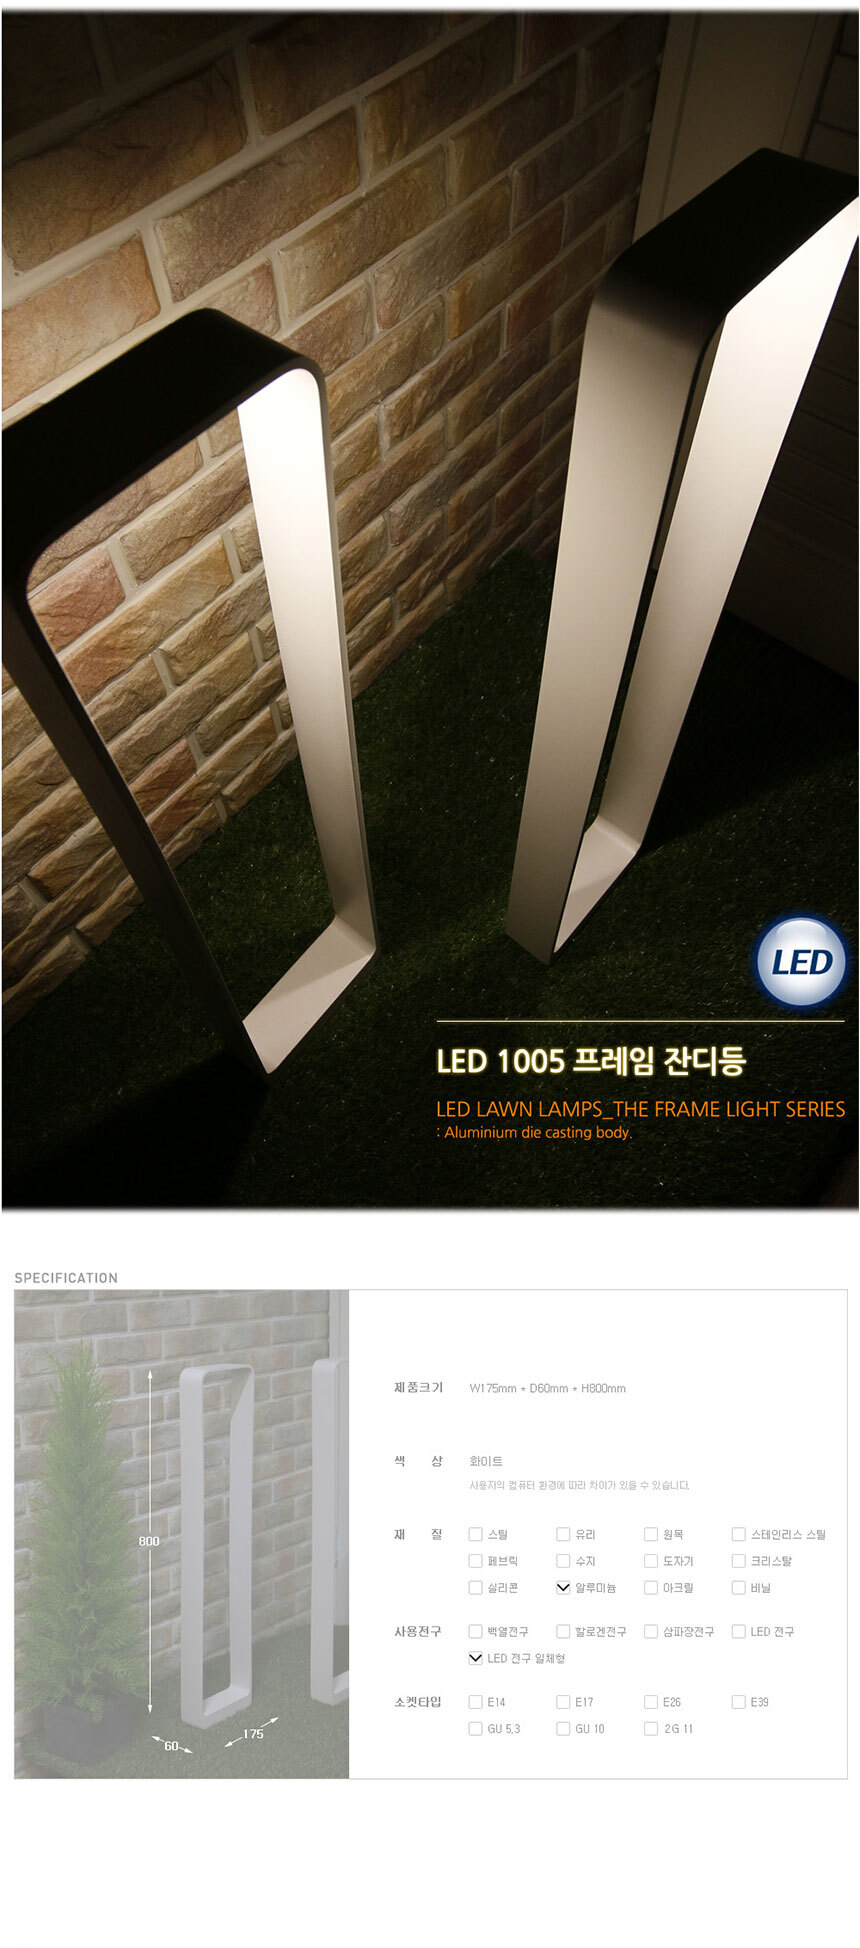 LED 1005 프레임 잔디등
제품크기 W175mm * D60mm * H800mm
색상 화이트
재질 알루미늄
사용전구 LED 전구일체형
